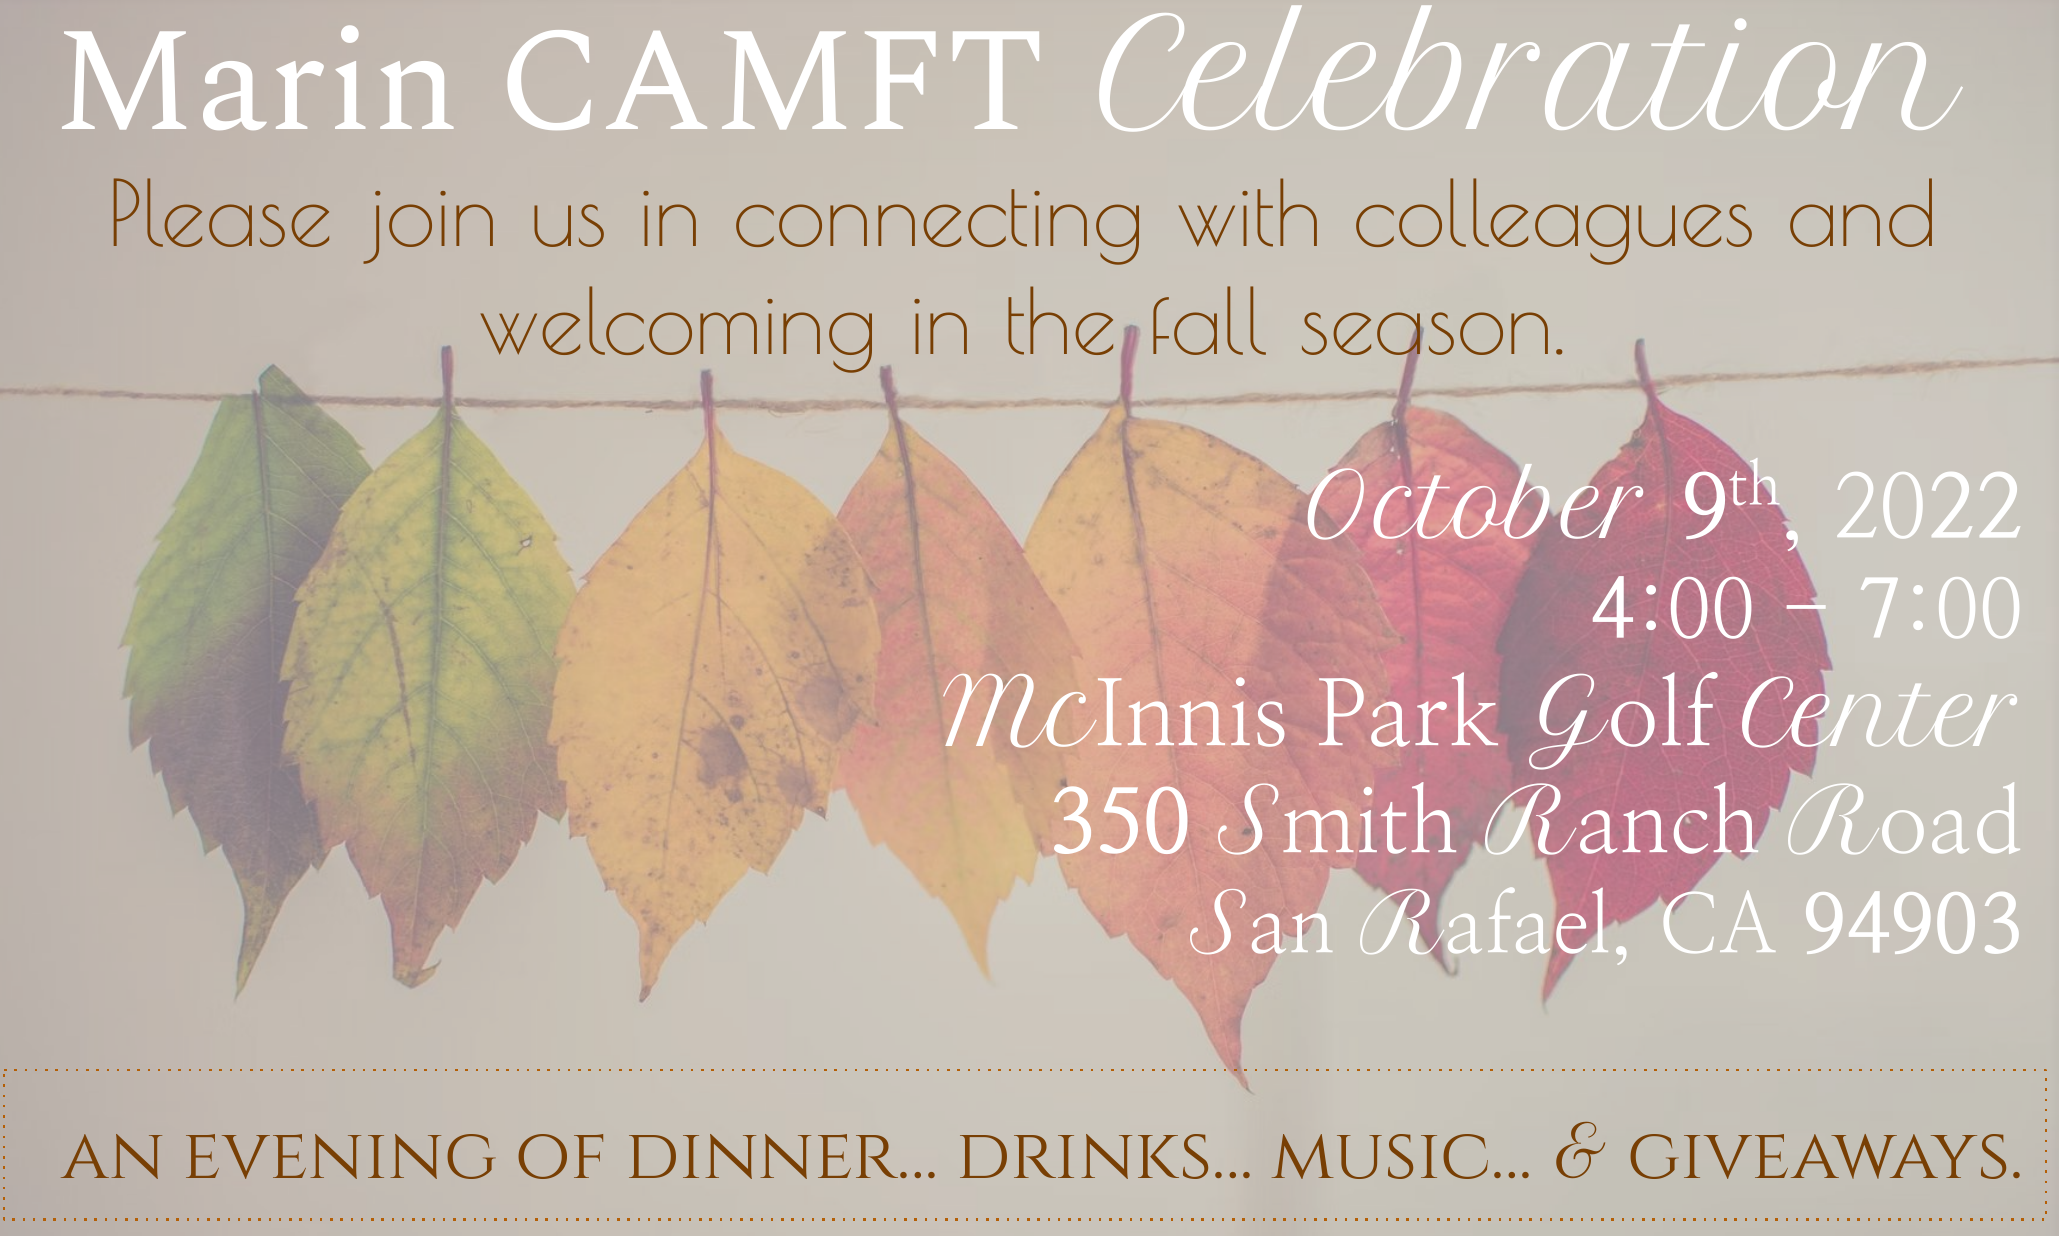 Marin CAMFT Celebration October 9